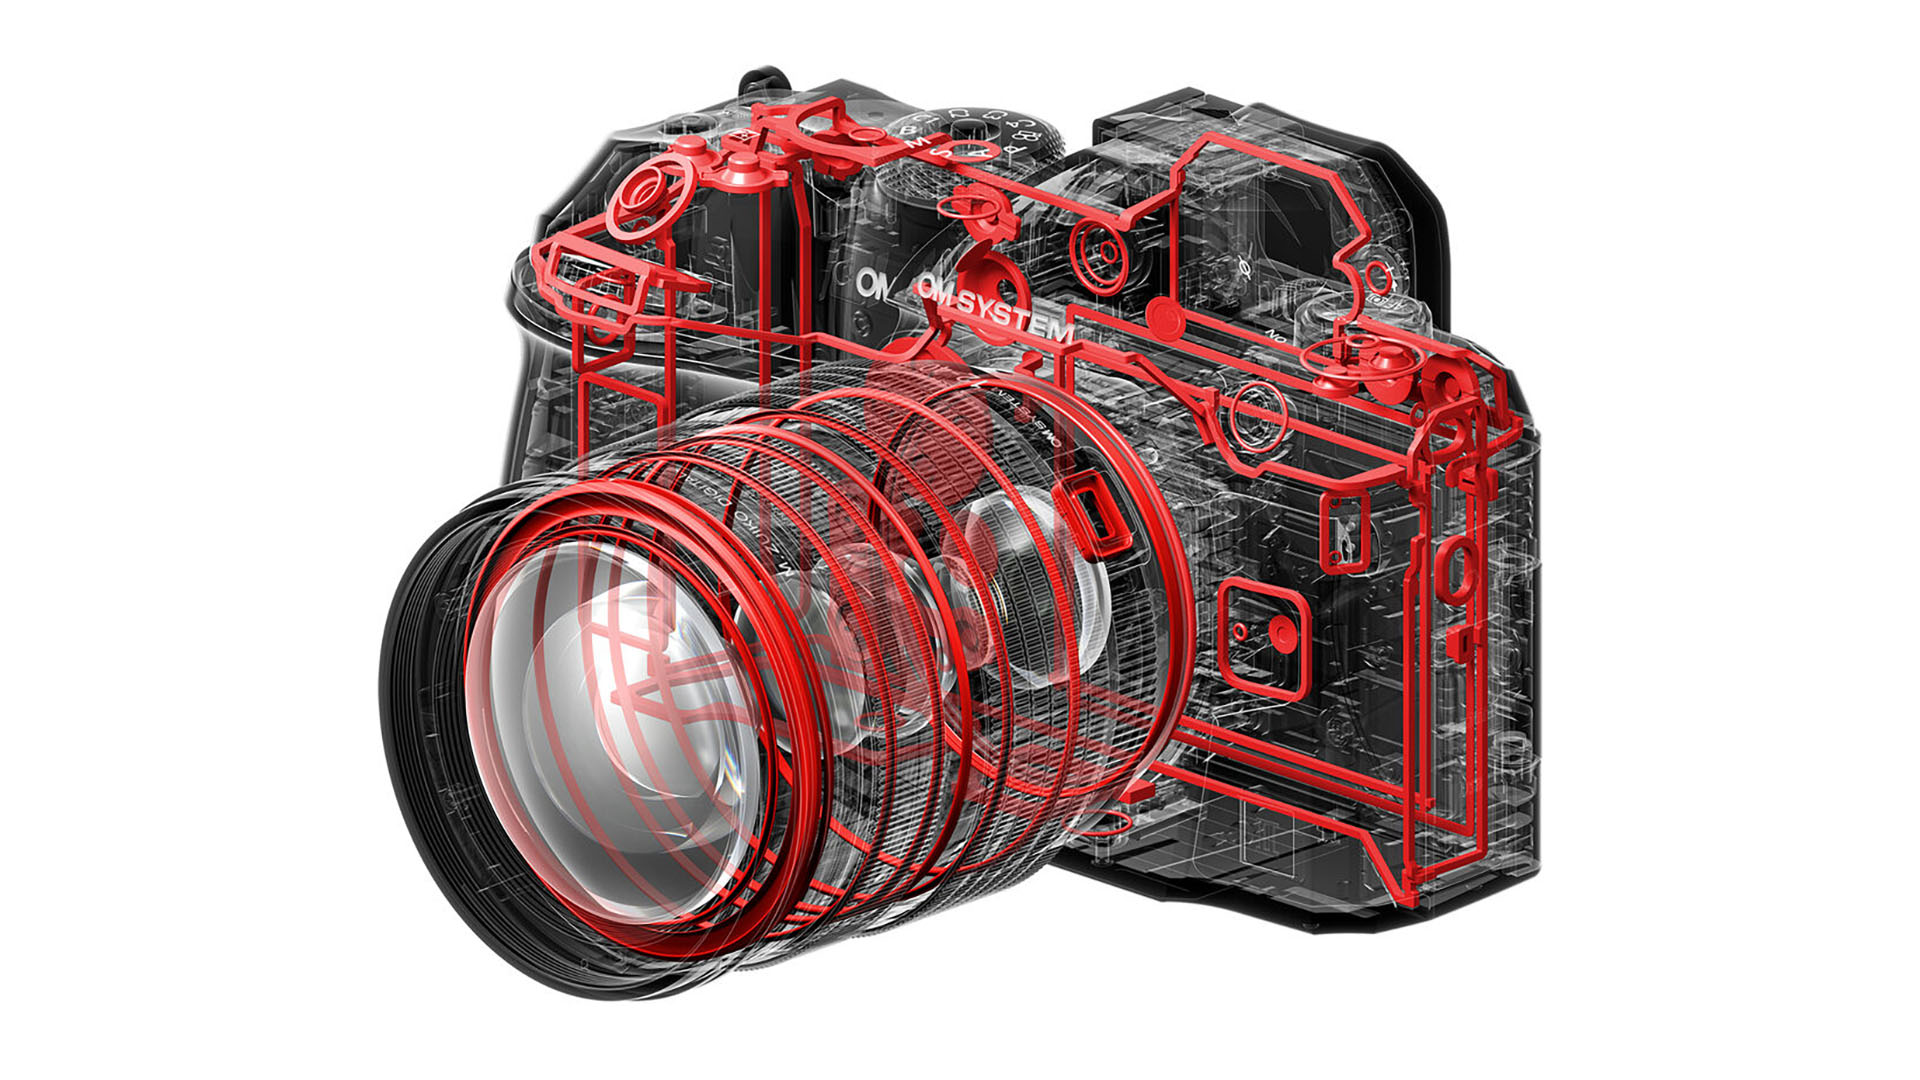 OM SYSTEM OM-1 Mark II Mirrorless Camera (Body Only)